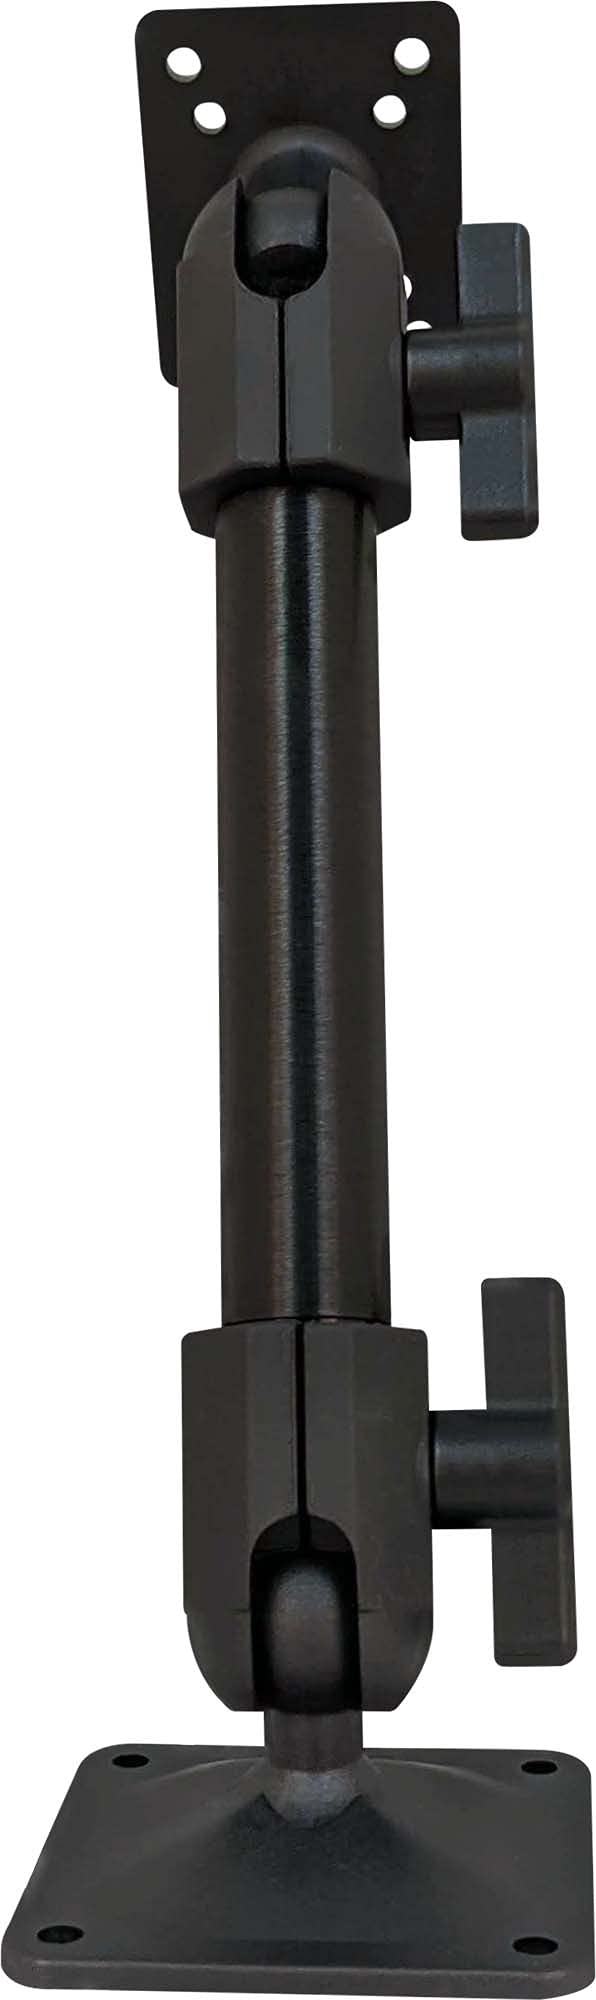 Panavise 717-09 9-Inch Slimline 2000 Pedestal Mount,Black